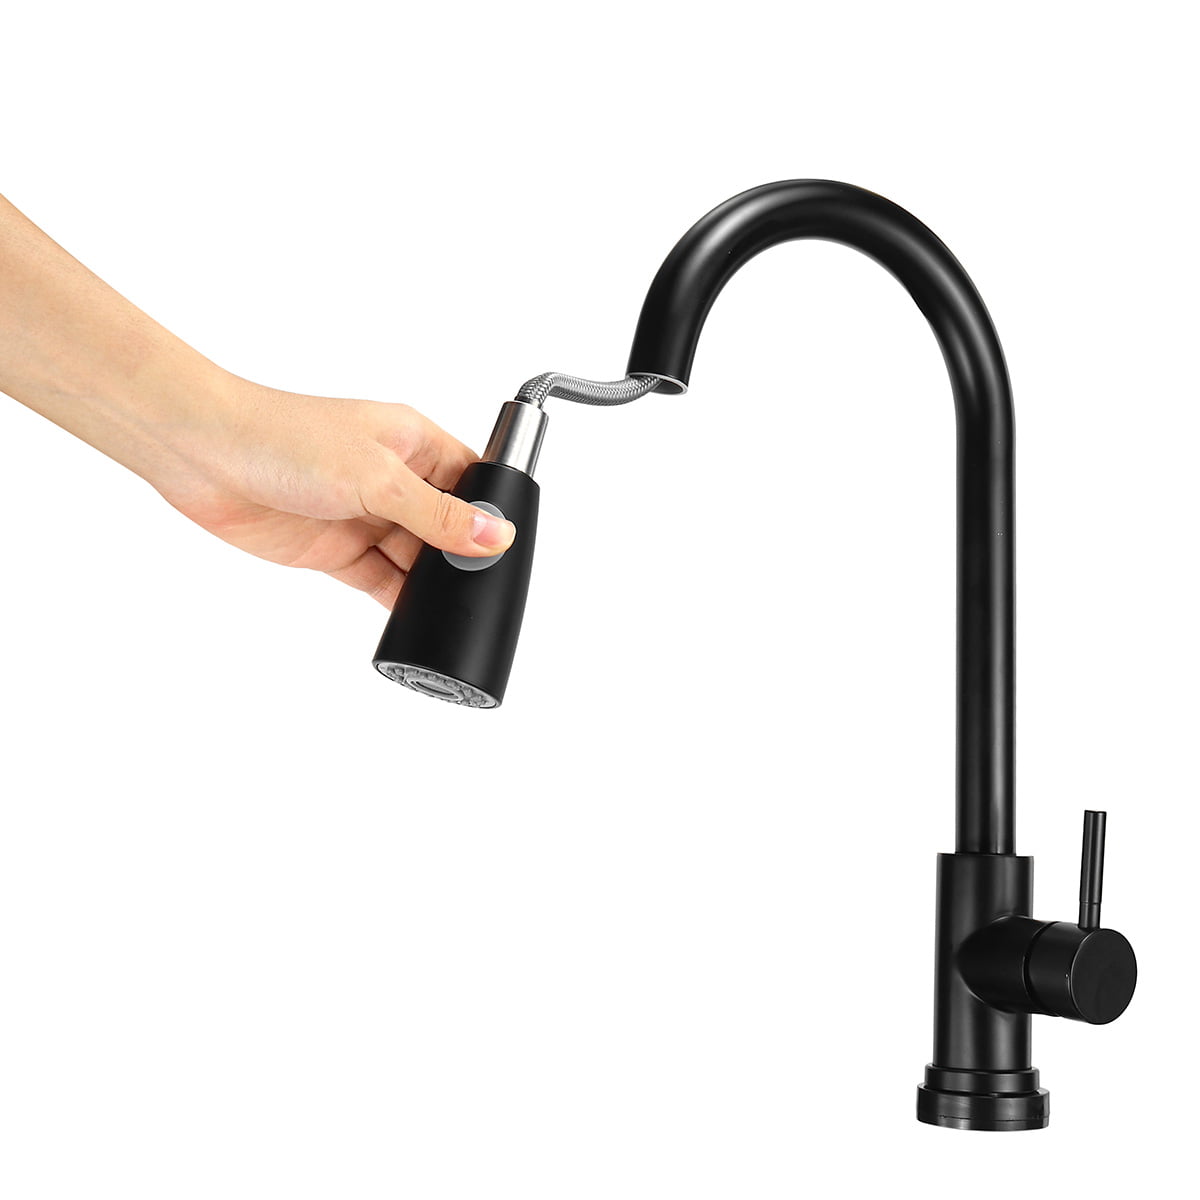 Black Kitchen Faucet Sink Pull Down Sprayer Swivel Spout Deck Mounted Mixer Tap 